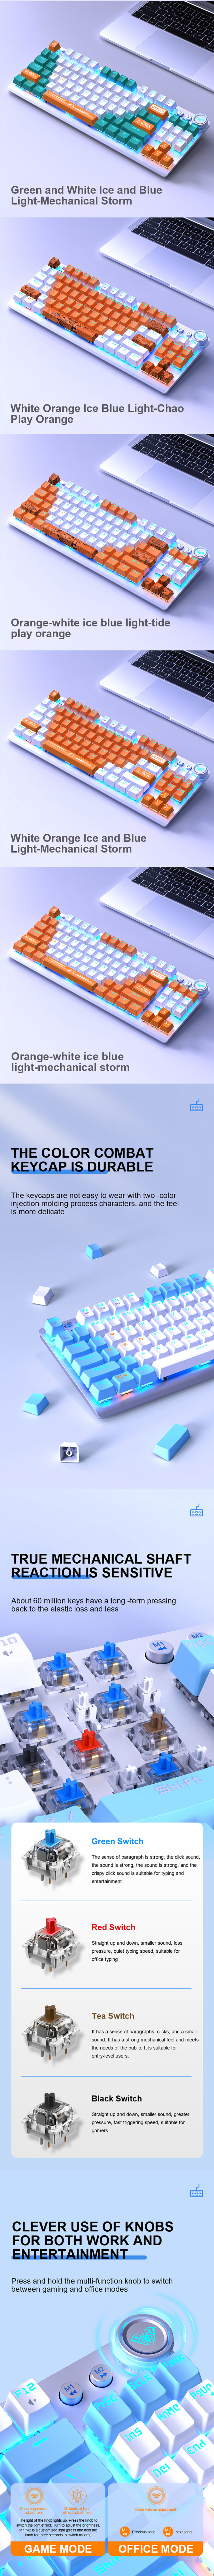 AULA F3001 Three-mode(2.4G+Bluet+Wired) mechanical keyboard Mechanical Gaming Keyboard (图2)